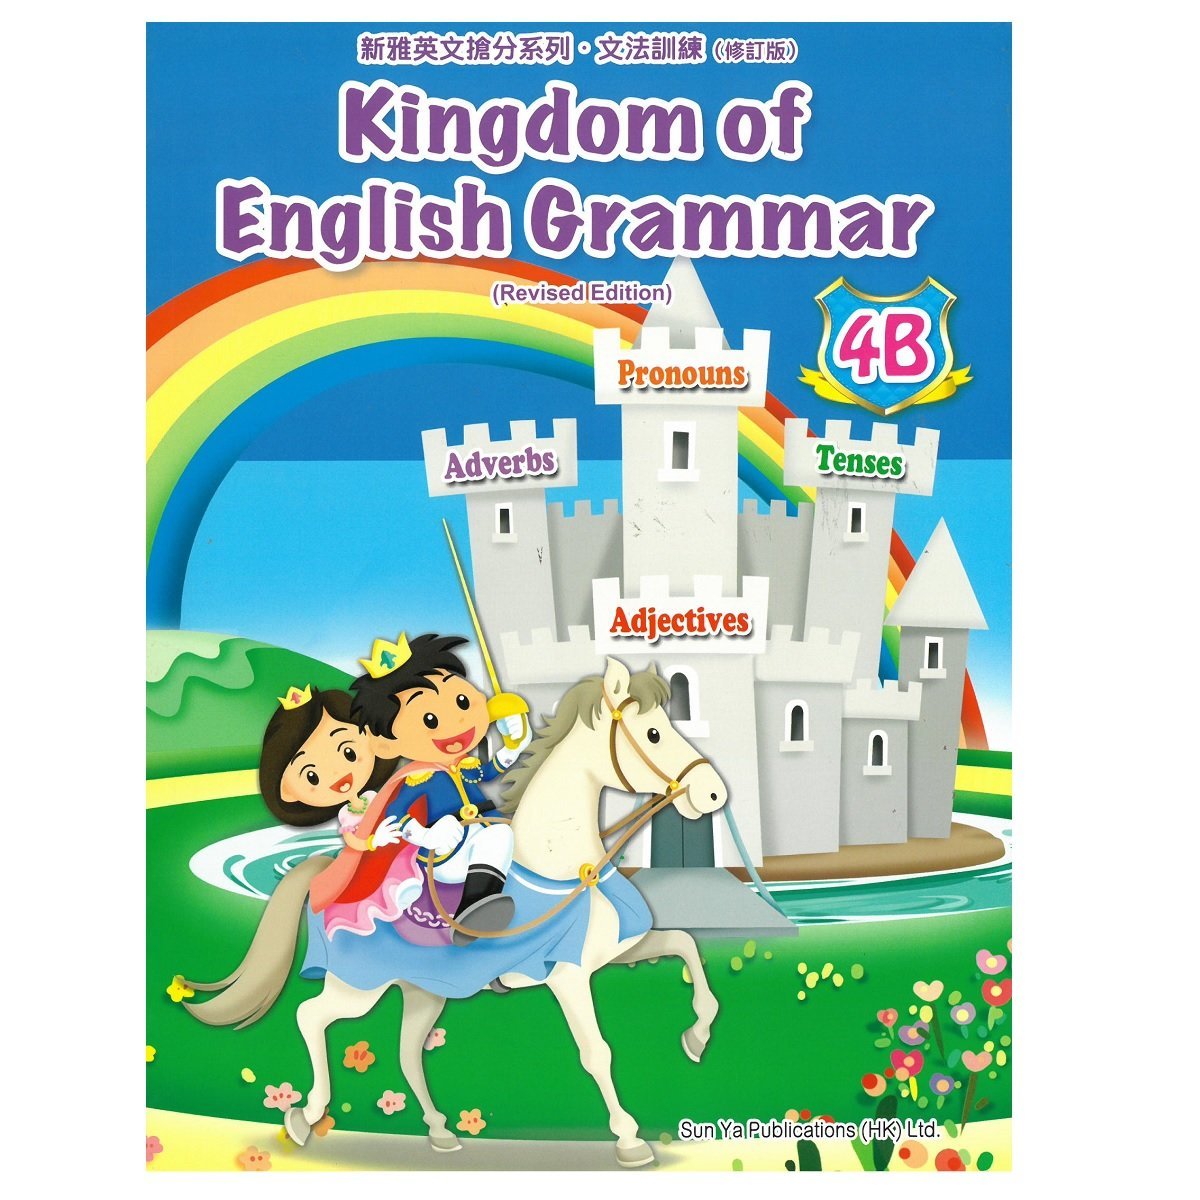 Kingdom of English Grammar 4B (Revised Edition)